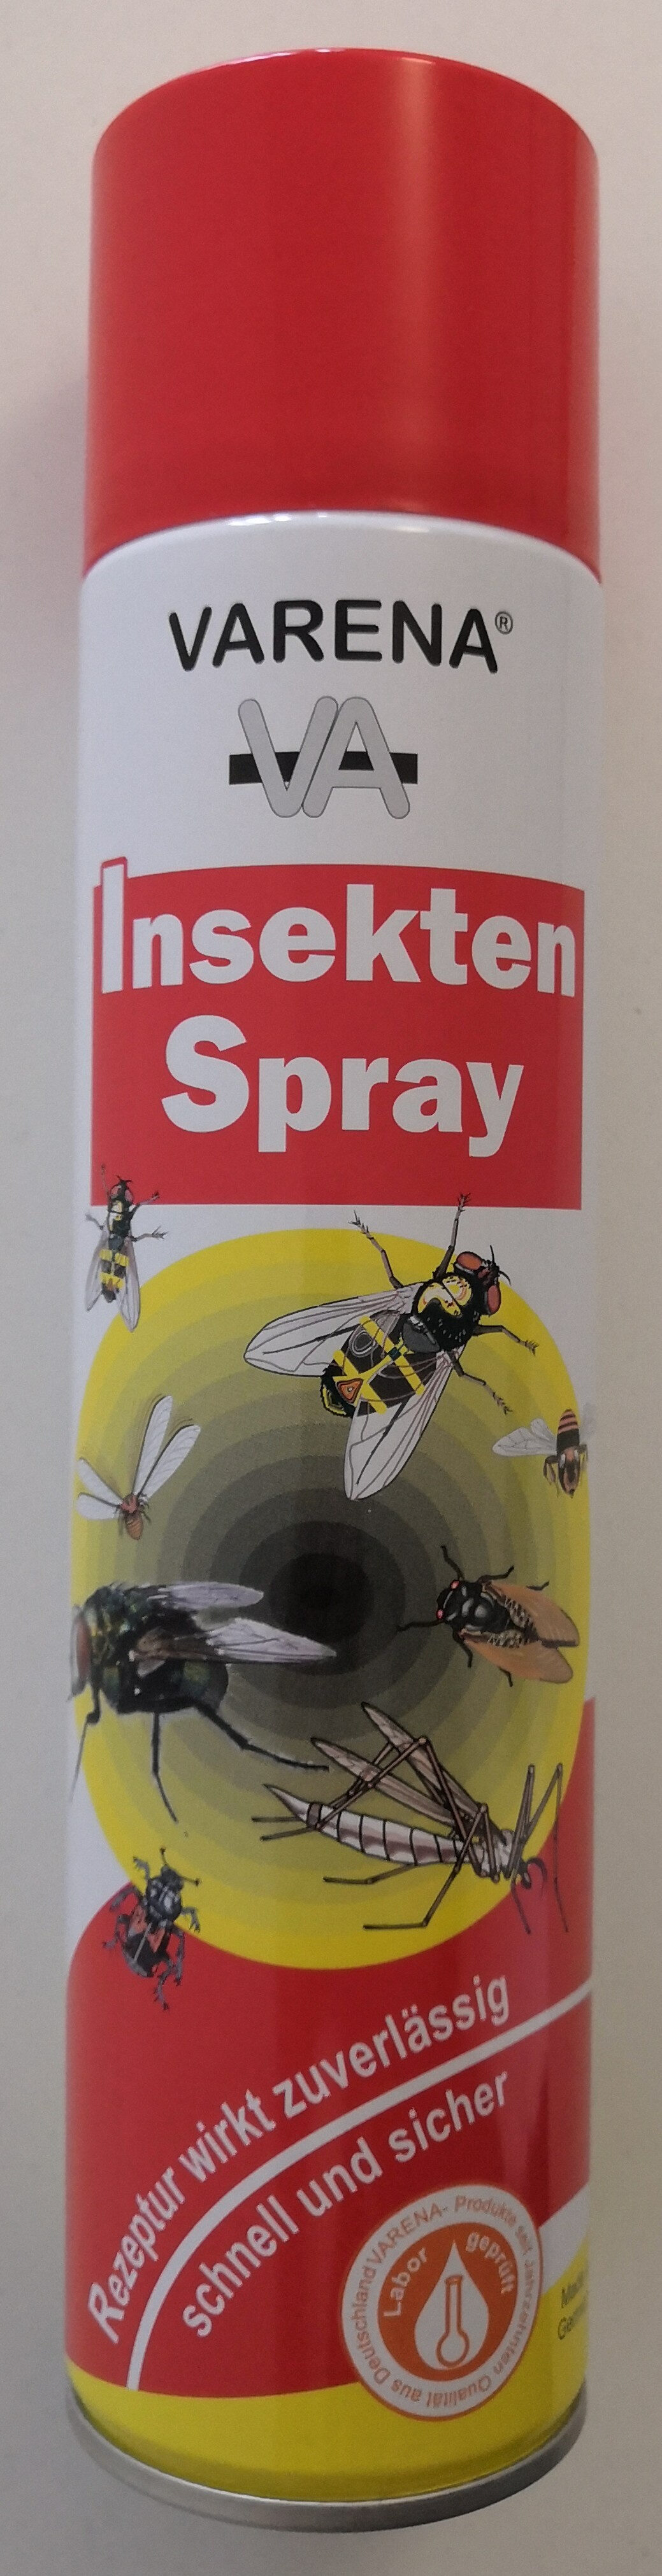 Insekten Spray - Product - de